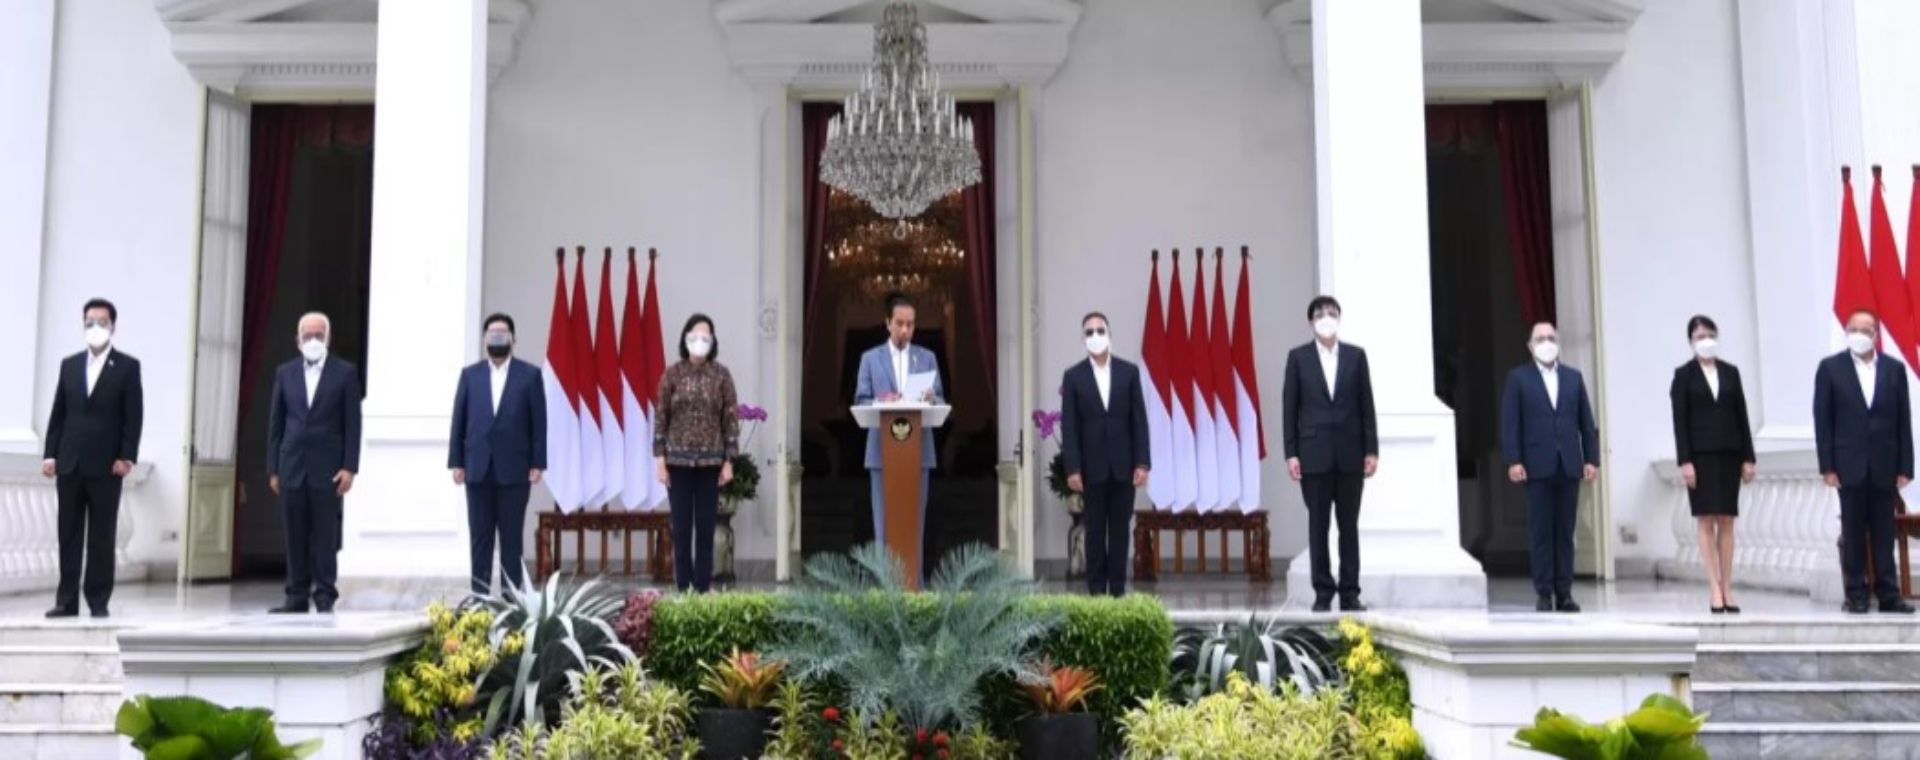 Presiden Joko Widodo (tengah) memperkenalkan jajaran lengkap SWF Indonesia di Istana Negara, Selasa (16/2/2021). - Dok. Setpres